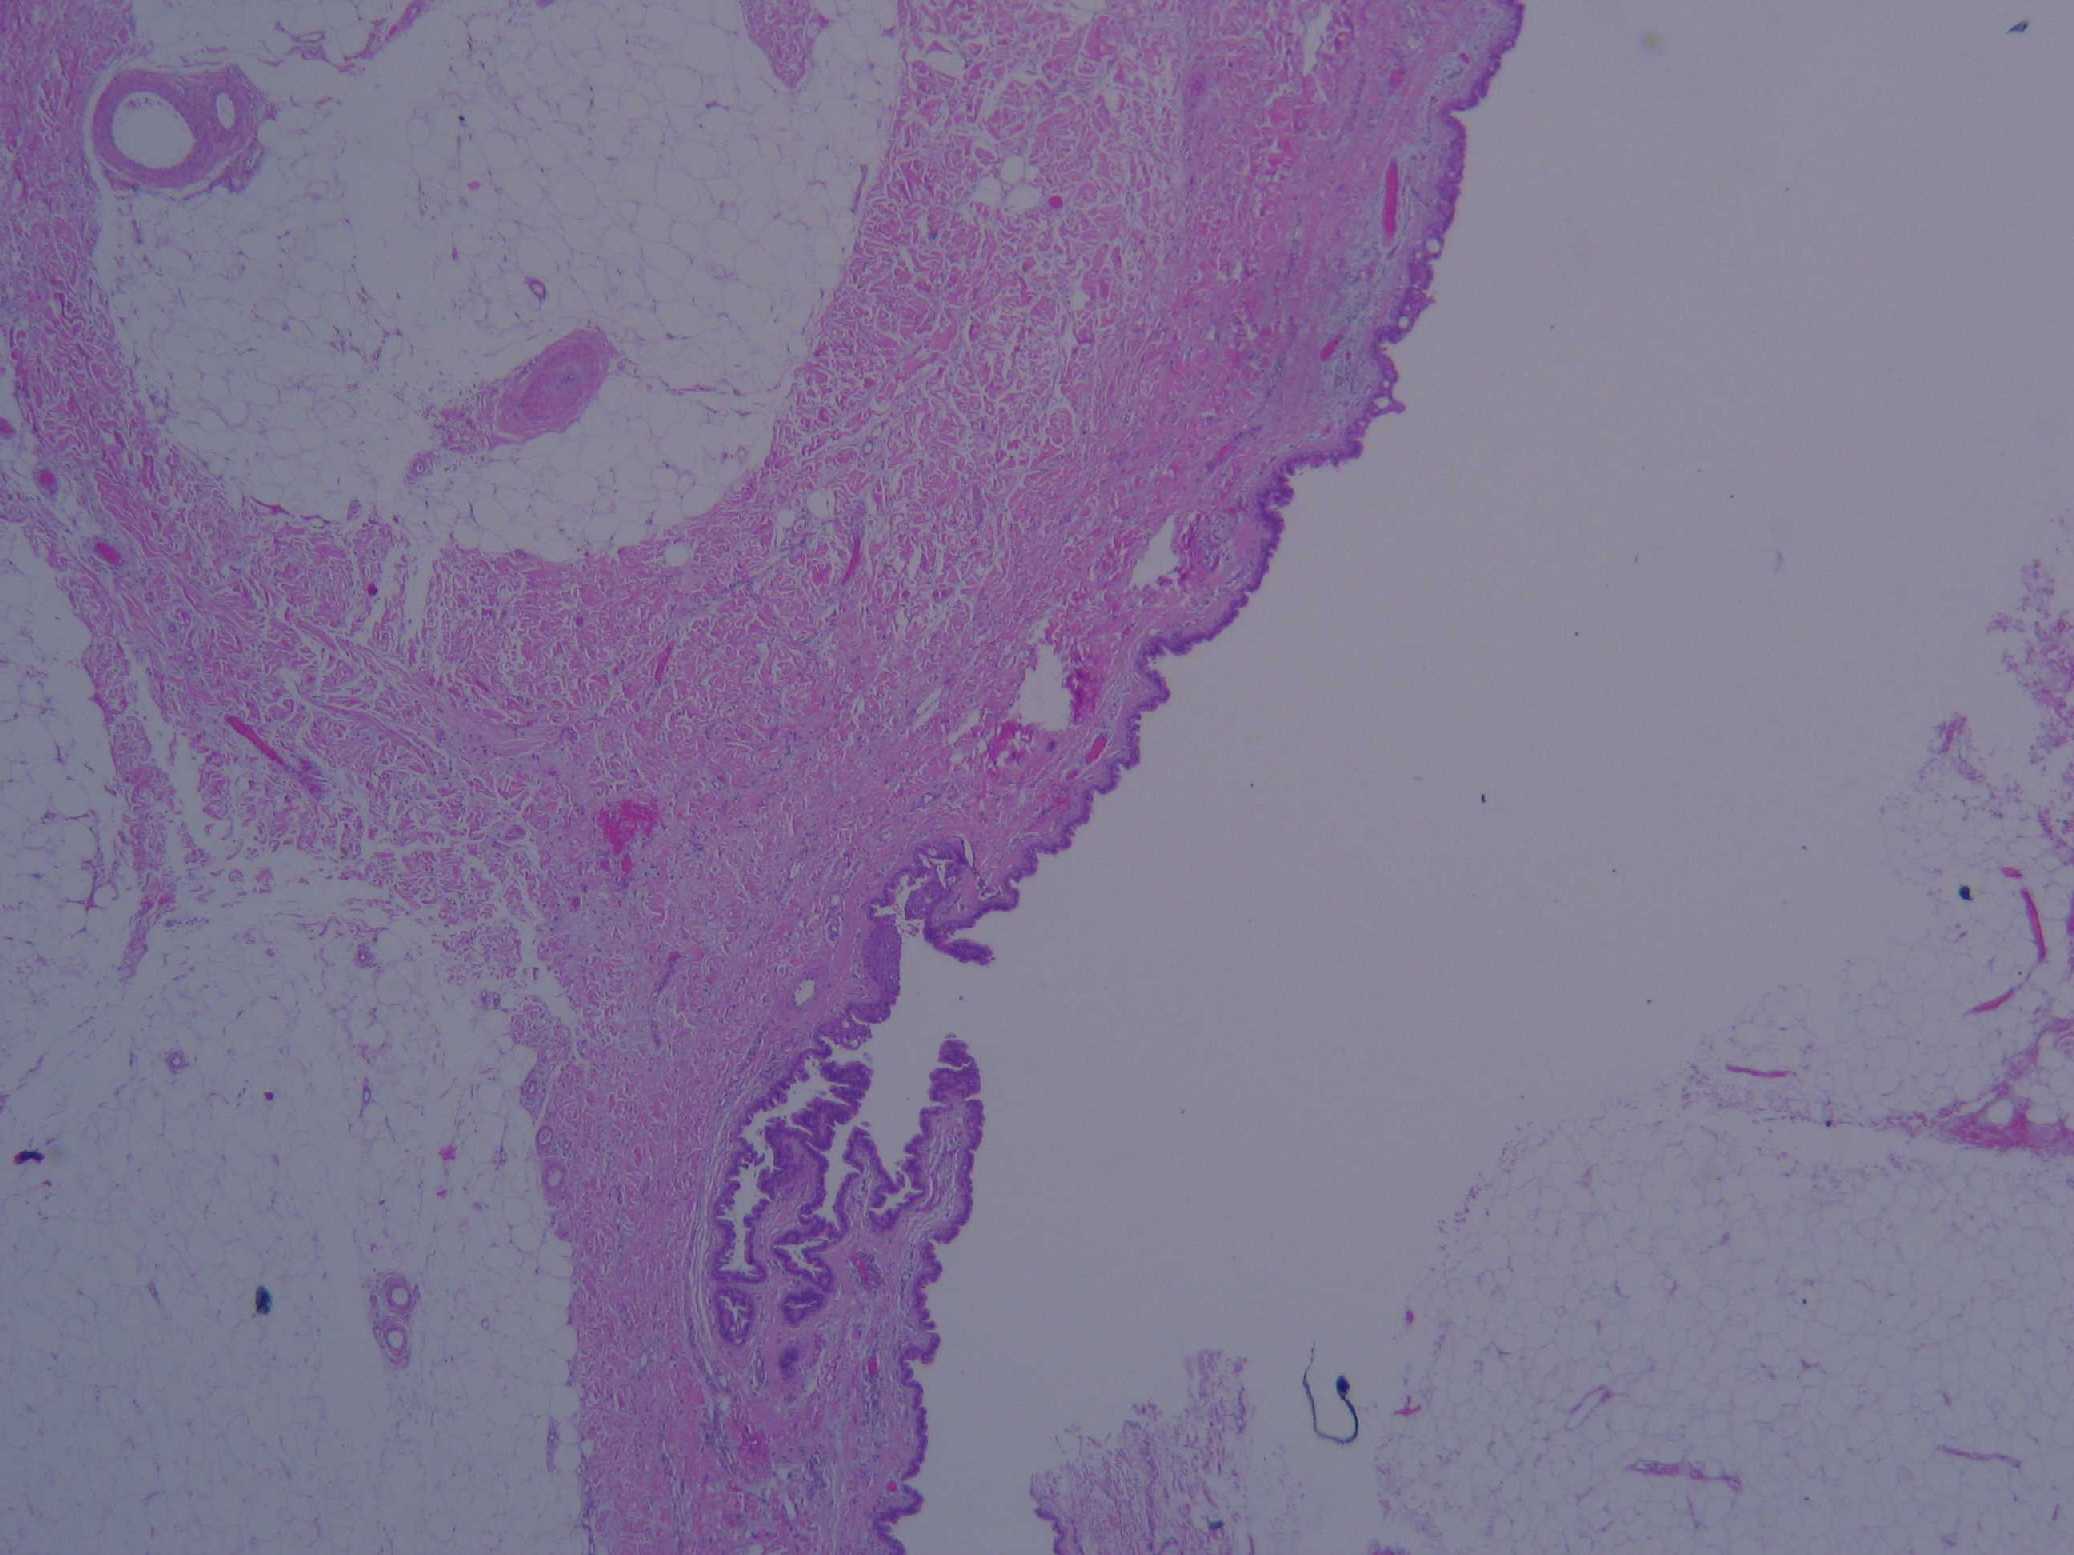 Imagen de Lesin qustica cutnea en nalga / Cutanous cystic lesion in buttock